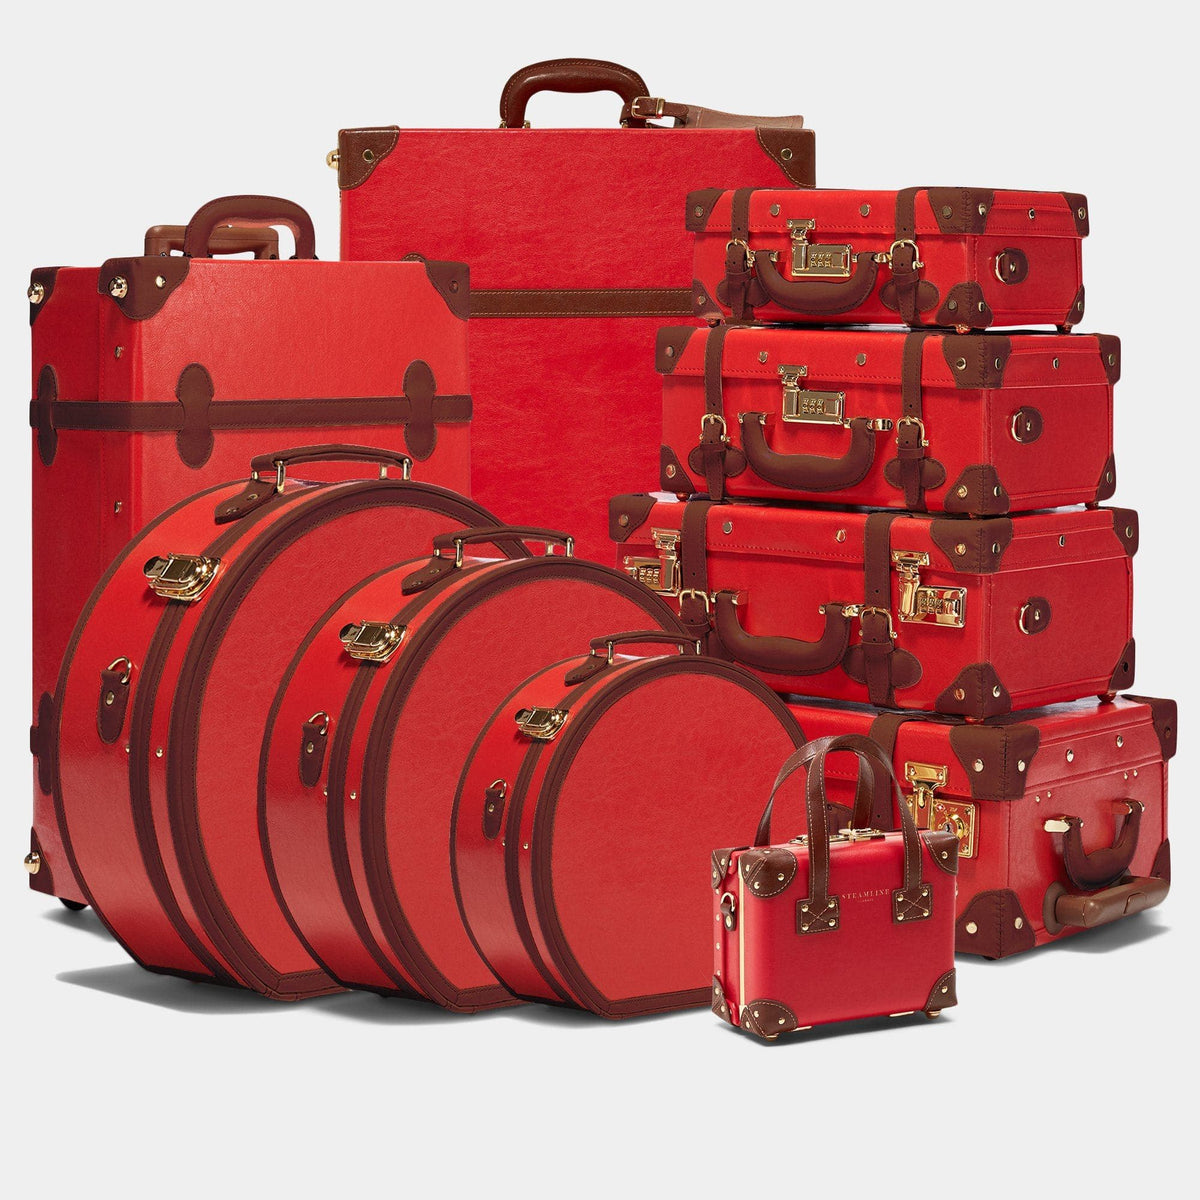 The Entrepreneur - Red Overnighter Overnighter Steamline Luggage 